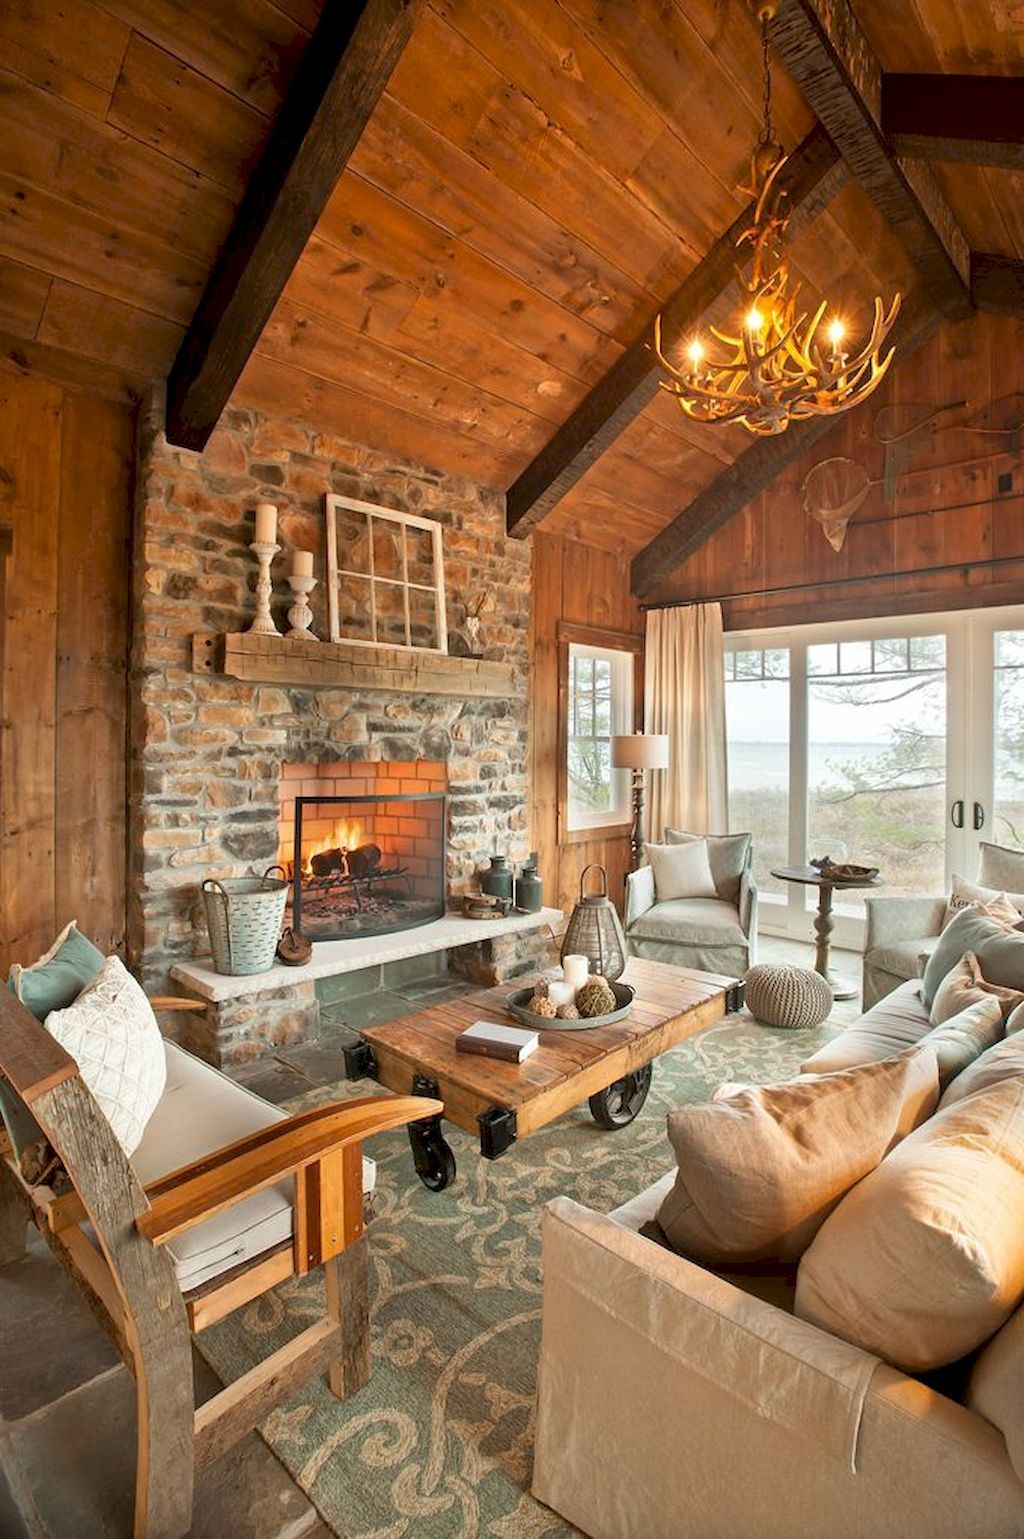 Stunning rustic farmhouse living room design ideas 5.jpg